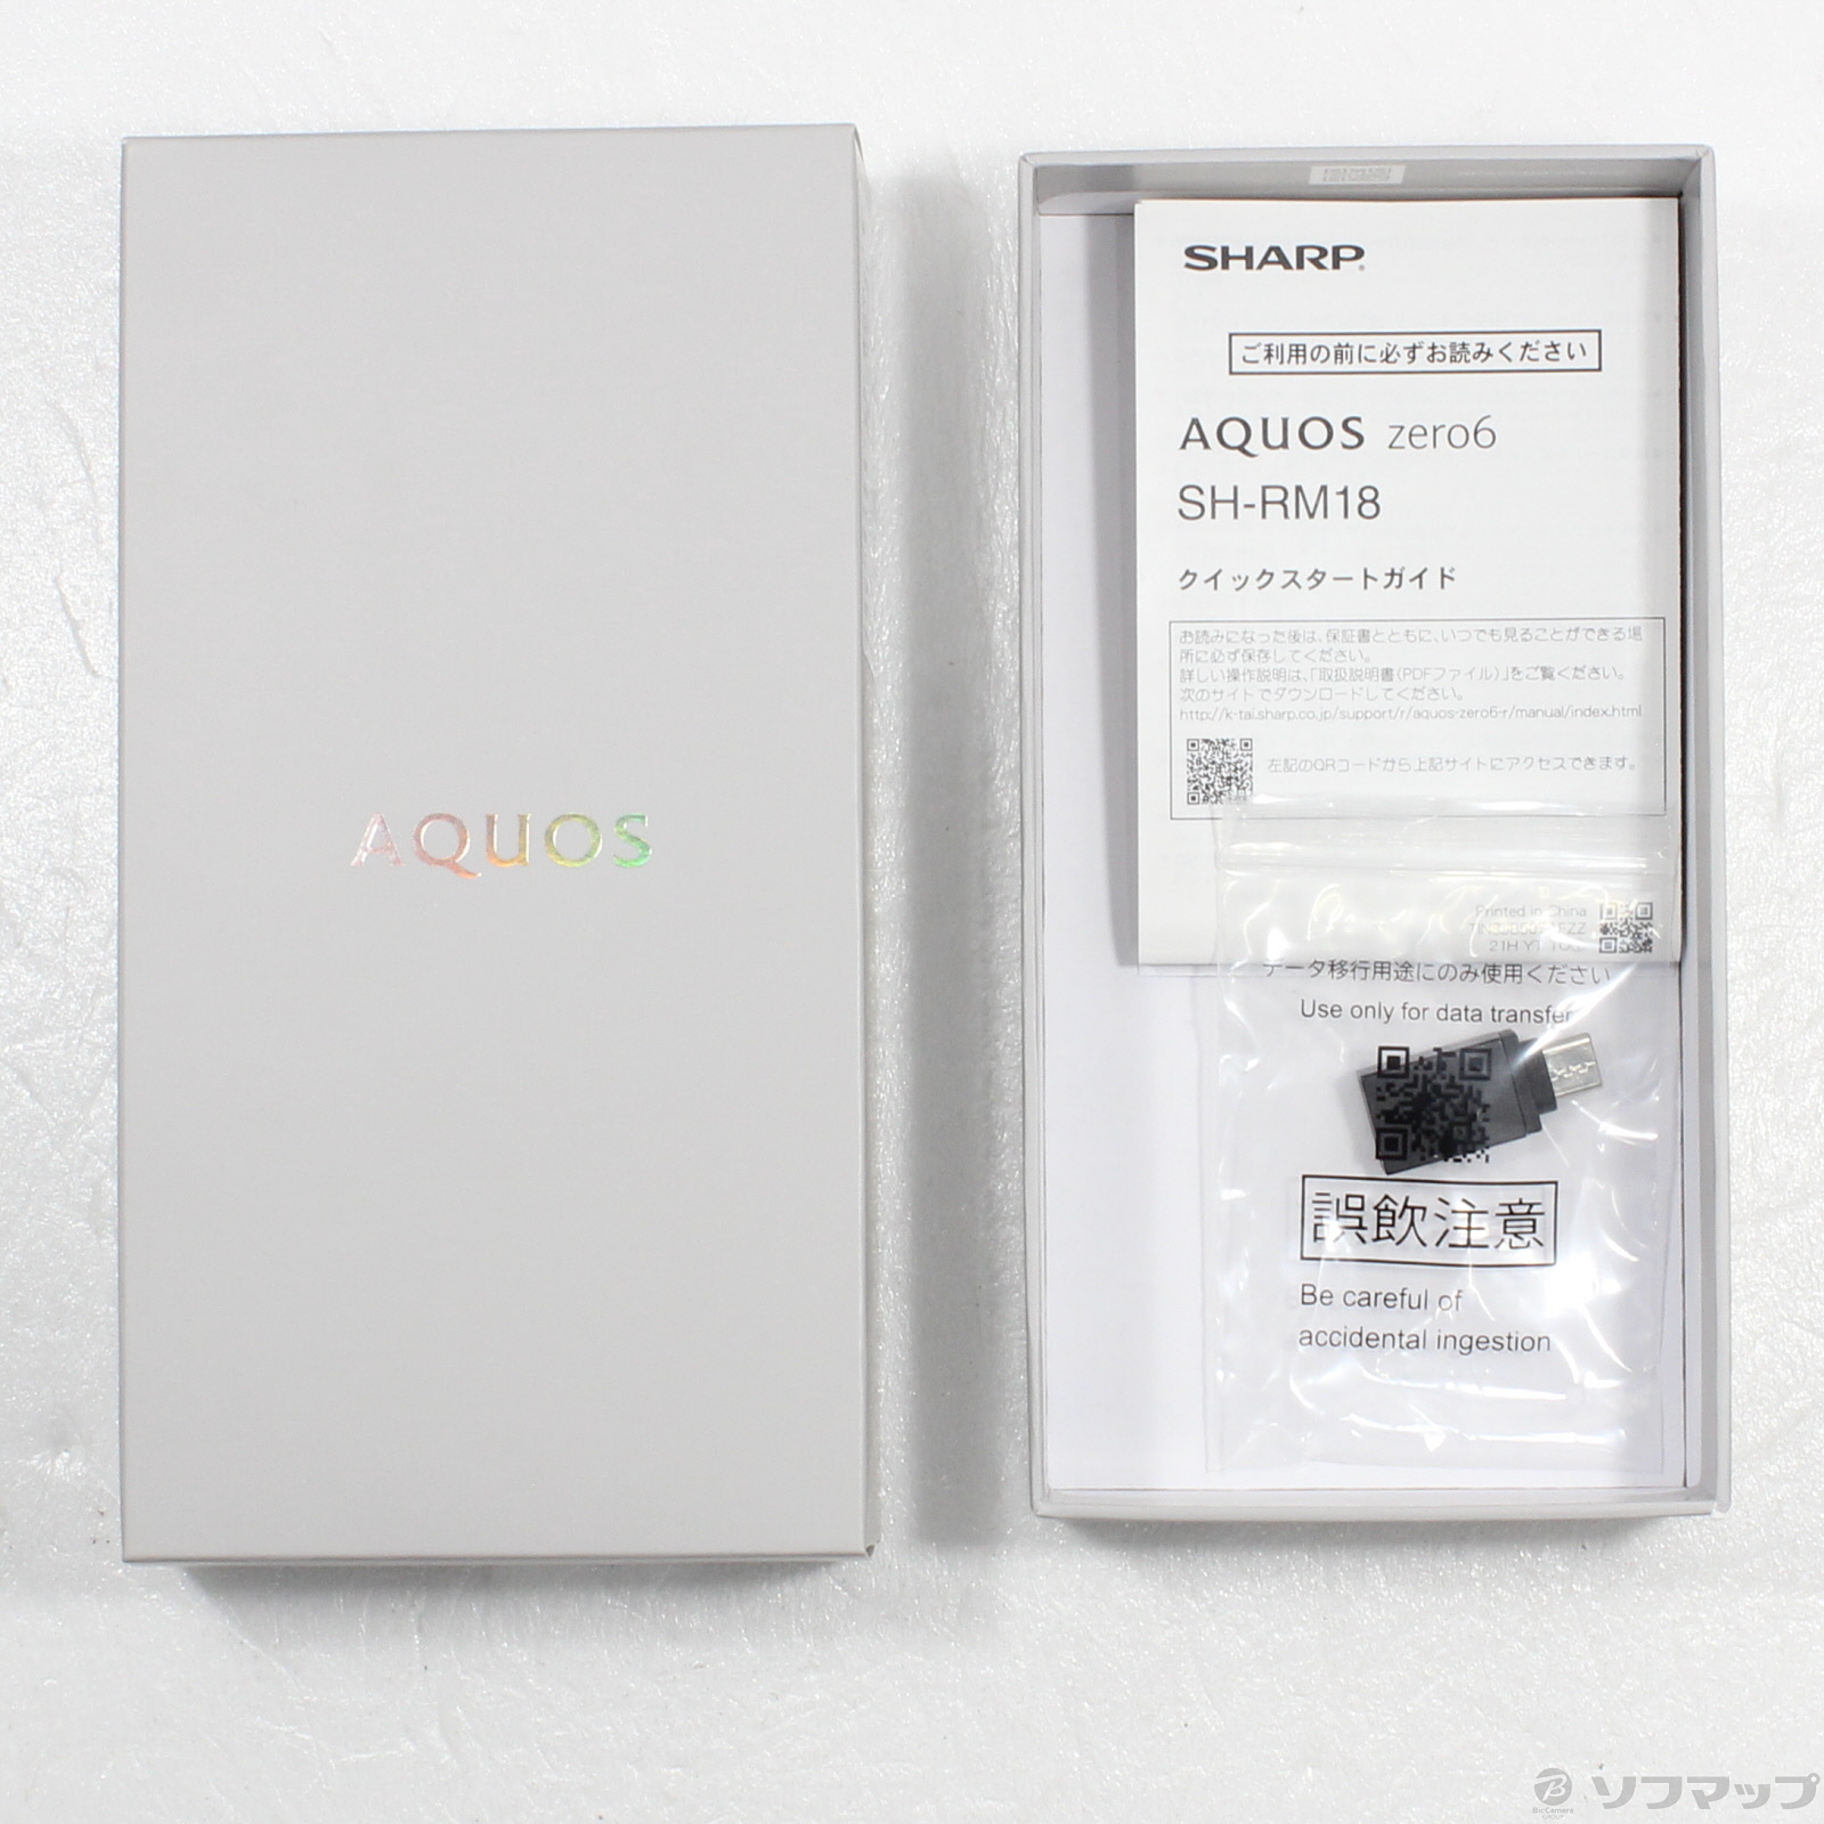 SHARP AQUOS zero6 SH-RM18 ブラック 128GB - スマートフォン本体